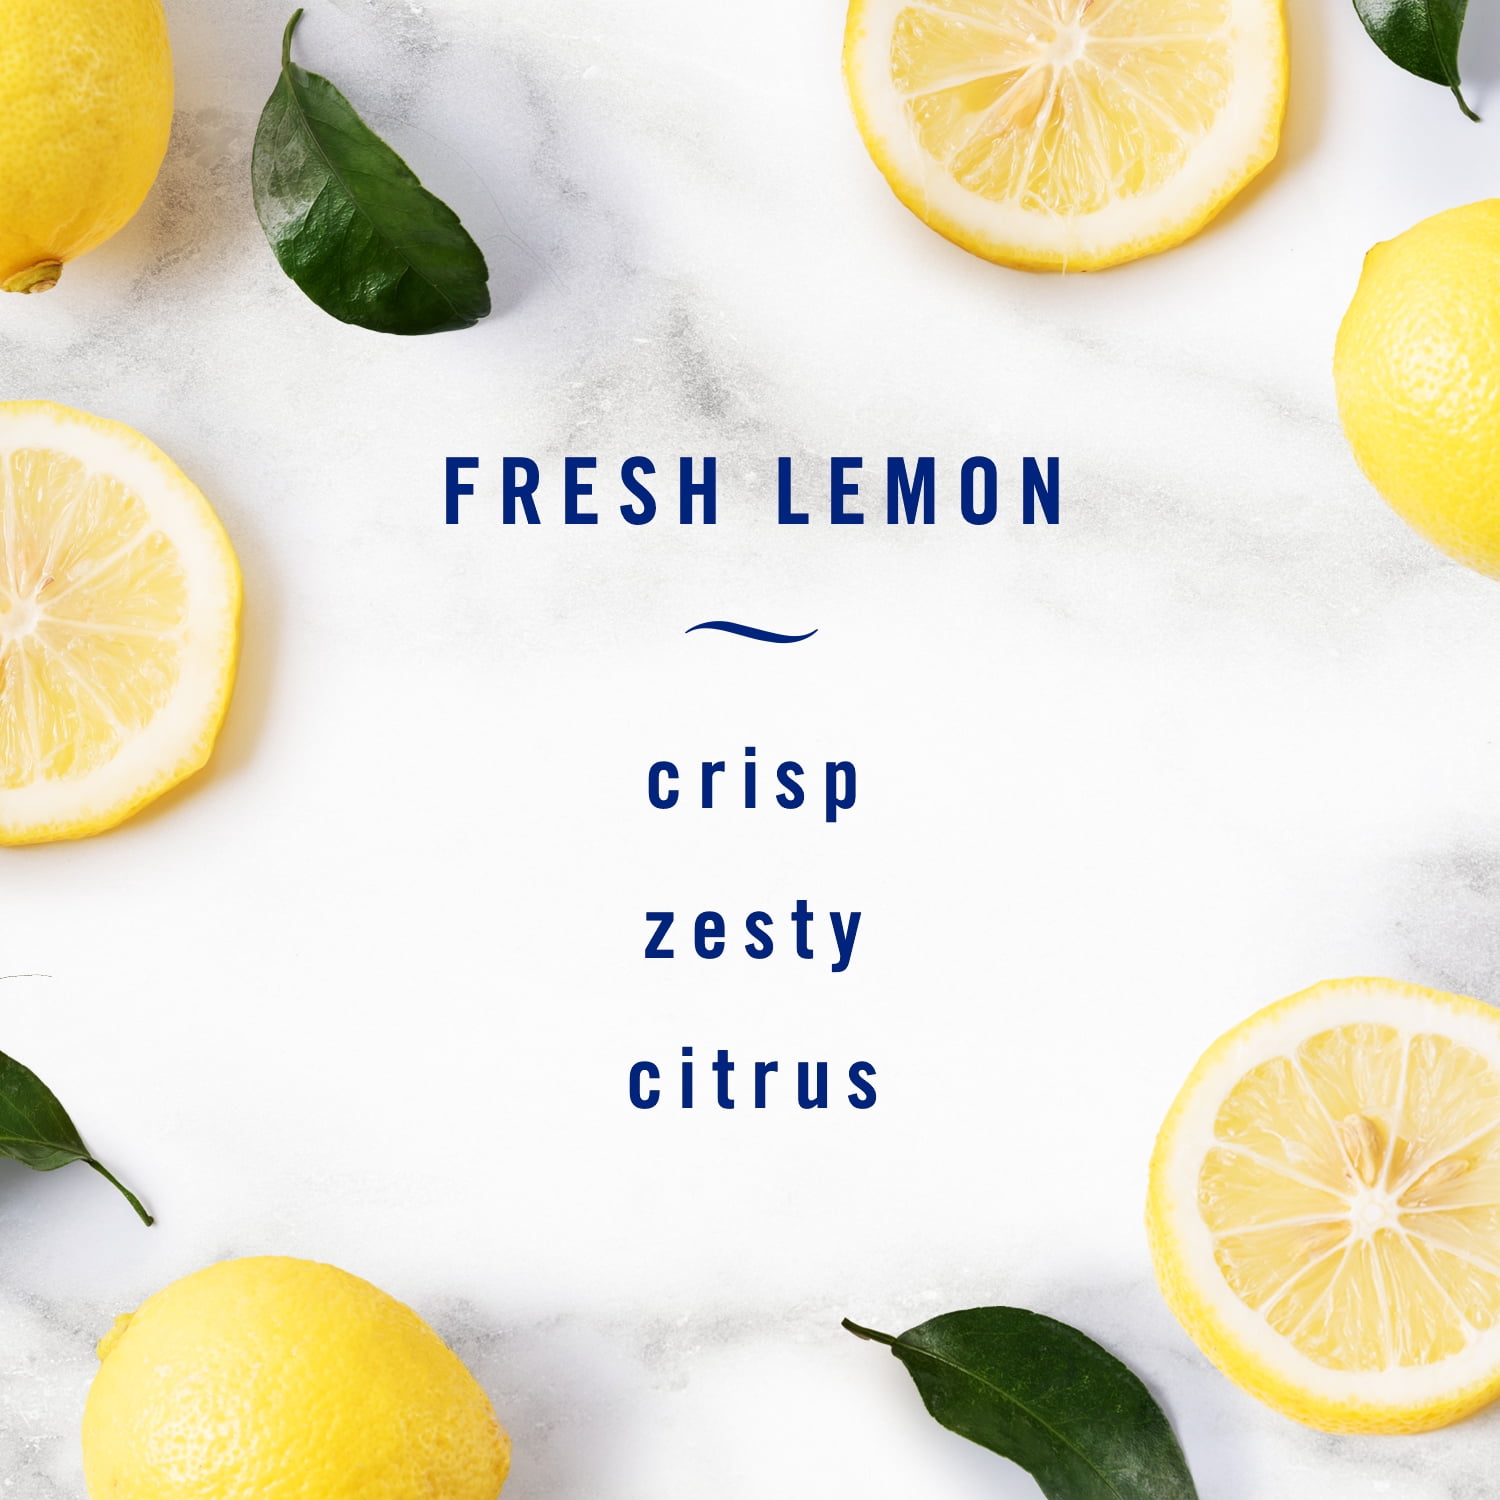 Febreze Air Effects Kitchen Odor Fighter Air Freshener Fresh Lemon